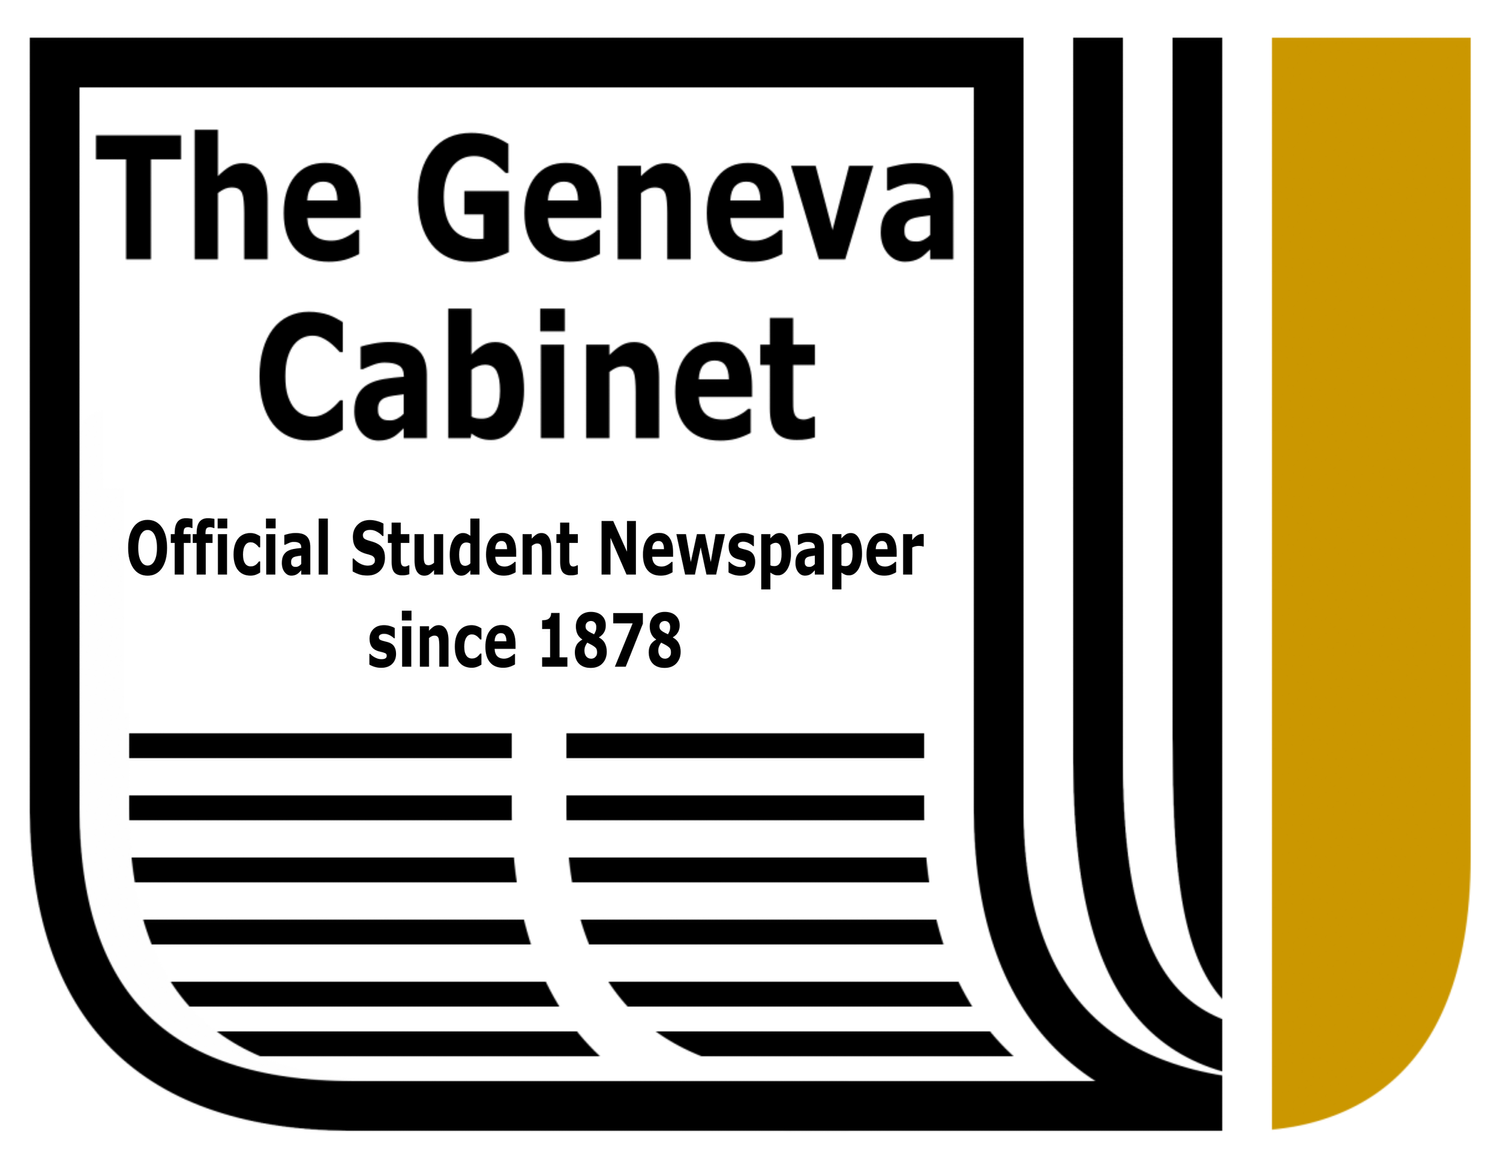 The Geneva Cabinet